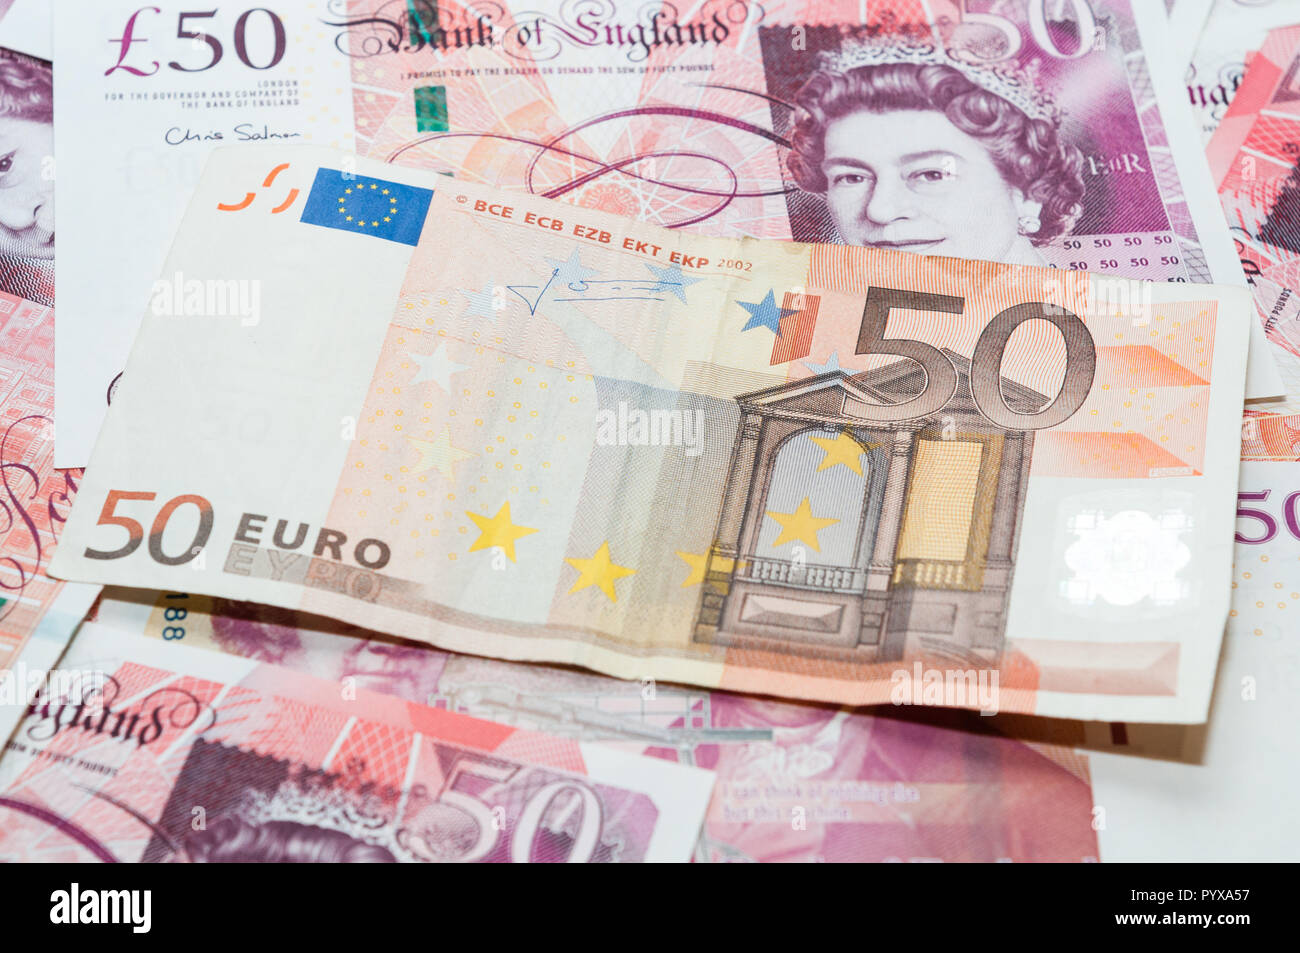 convert 50 euros to british pounds